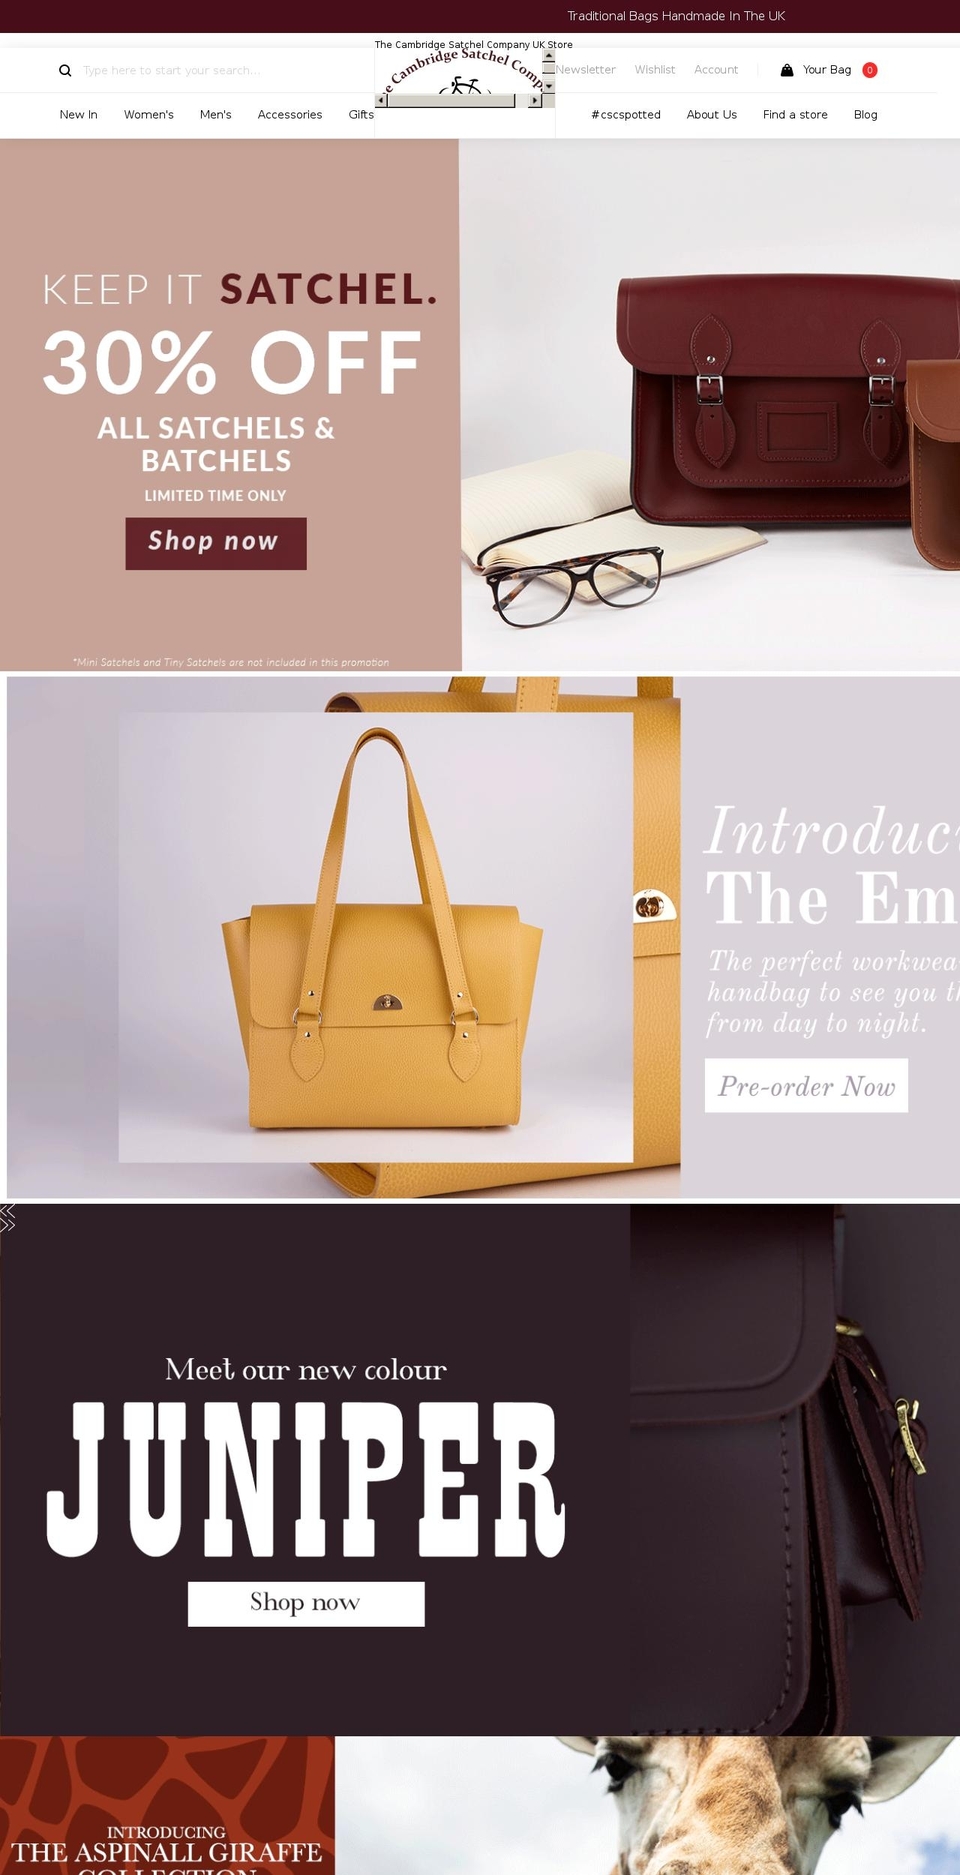 cambridge-satchels-company.biz shopify website screenshot